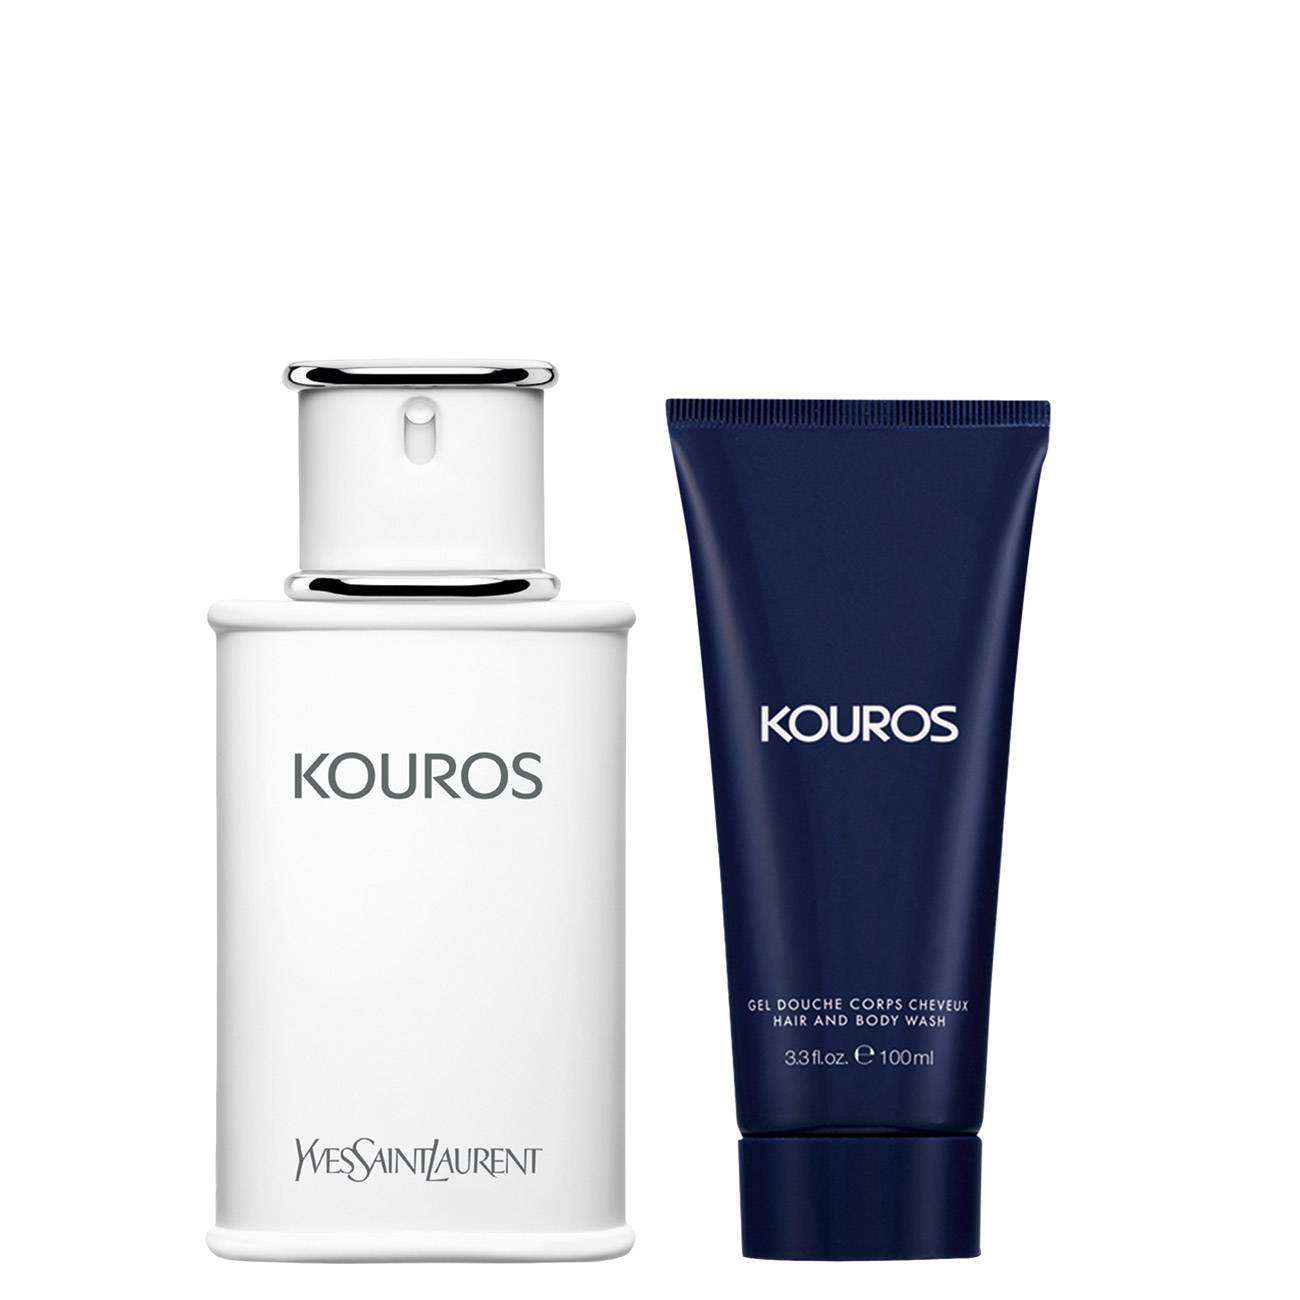 Set parfumuri Yves Saint Laurent KOUROS 200 ML 200ml cu comanda online